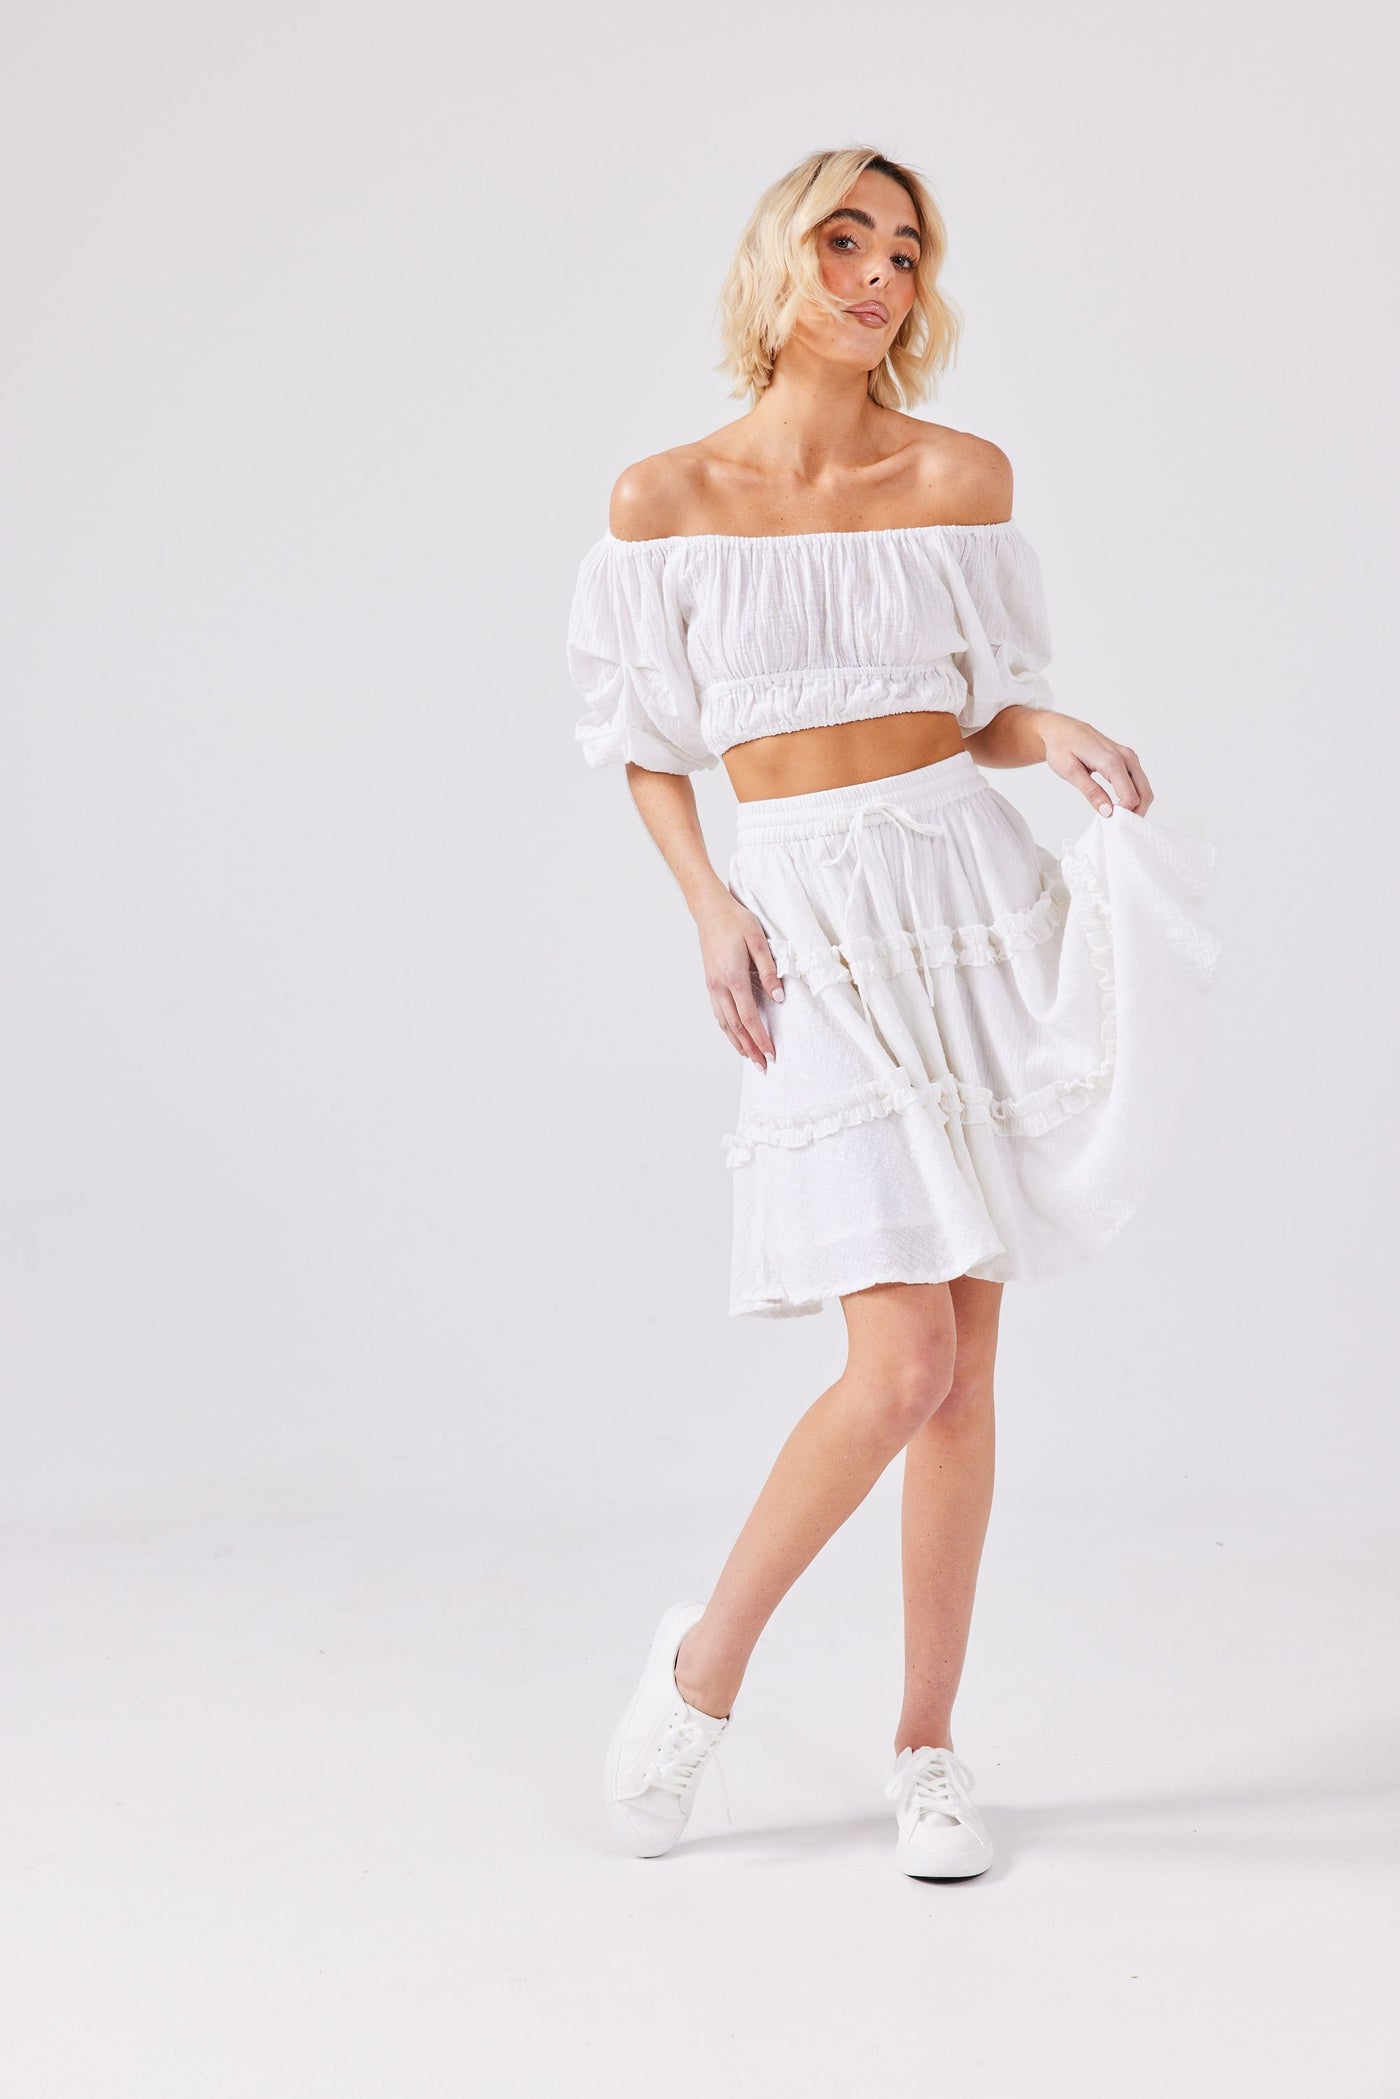 Penzance Skirt - White